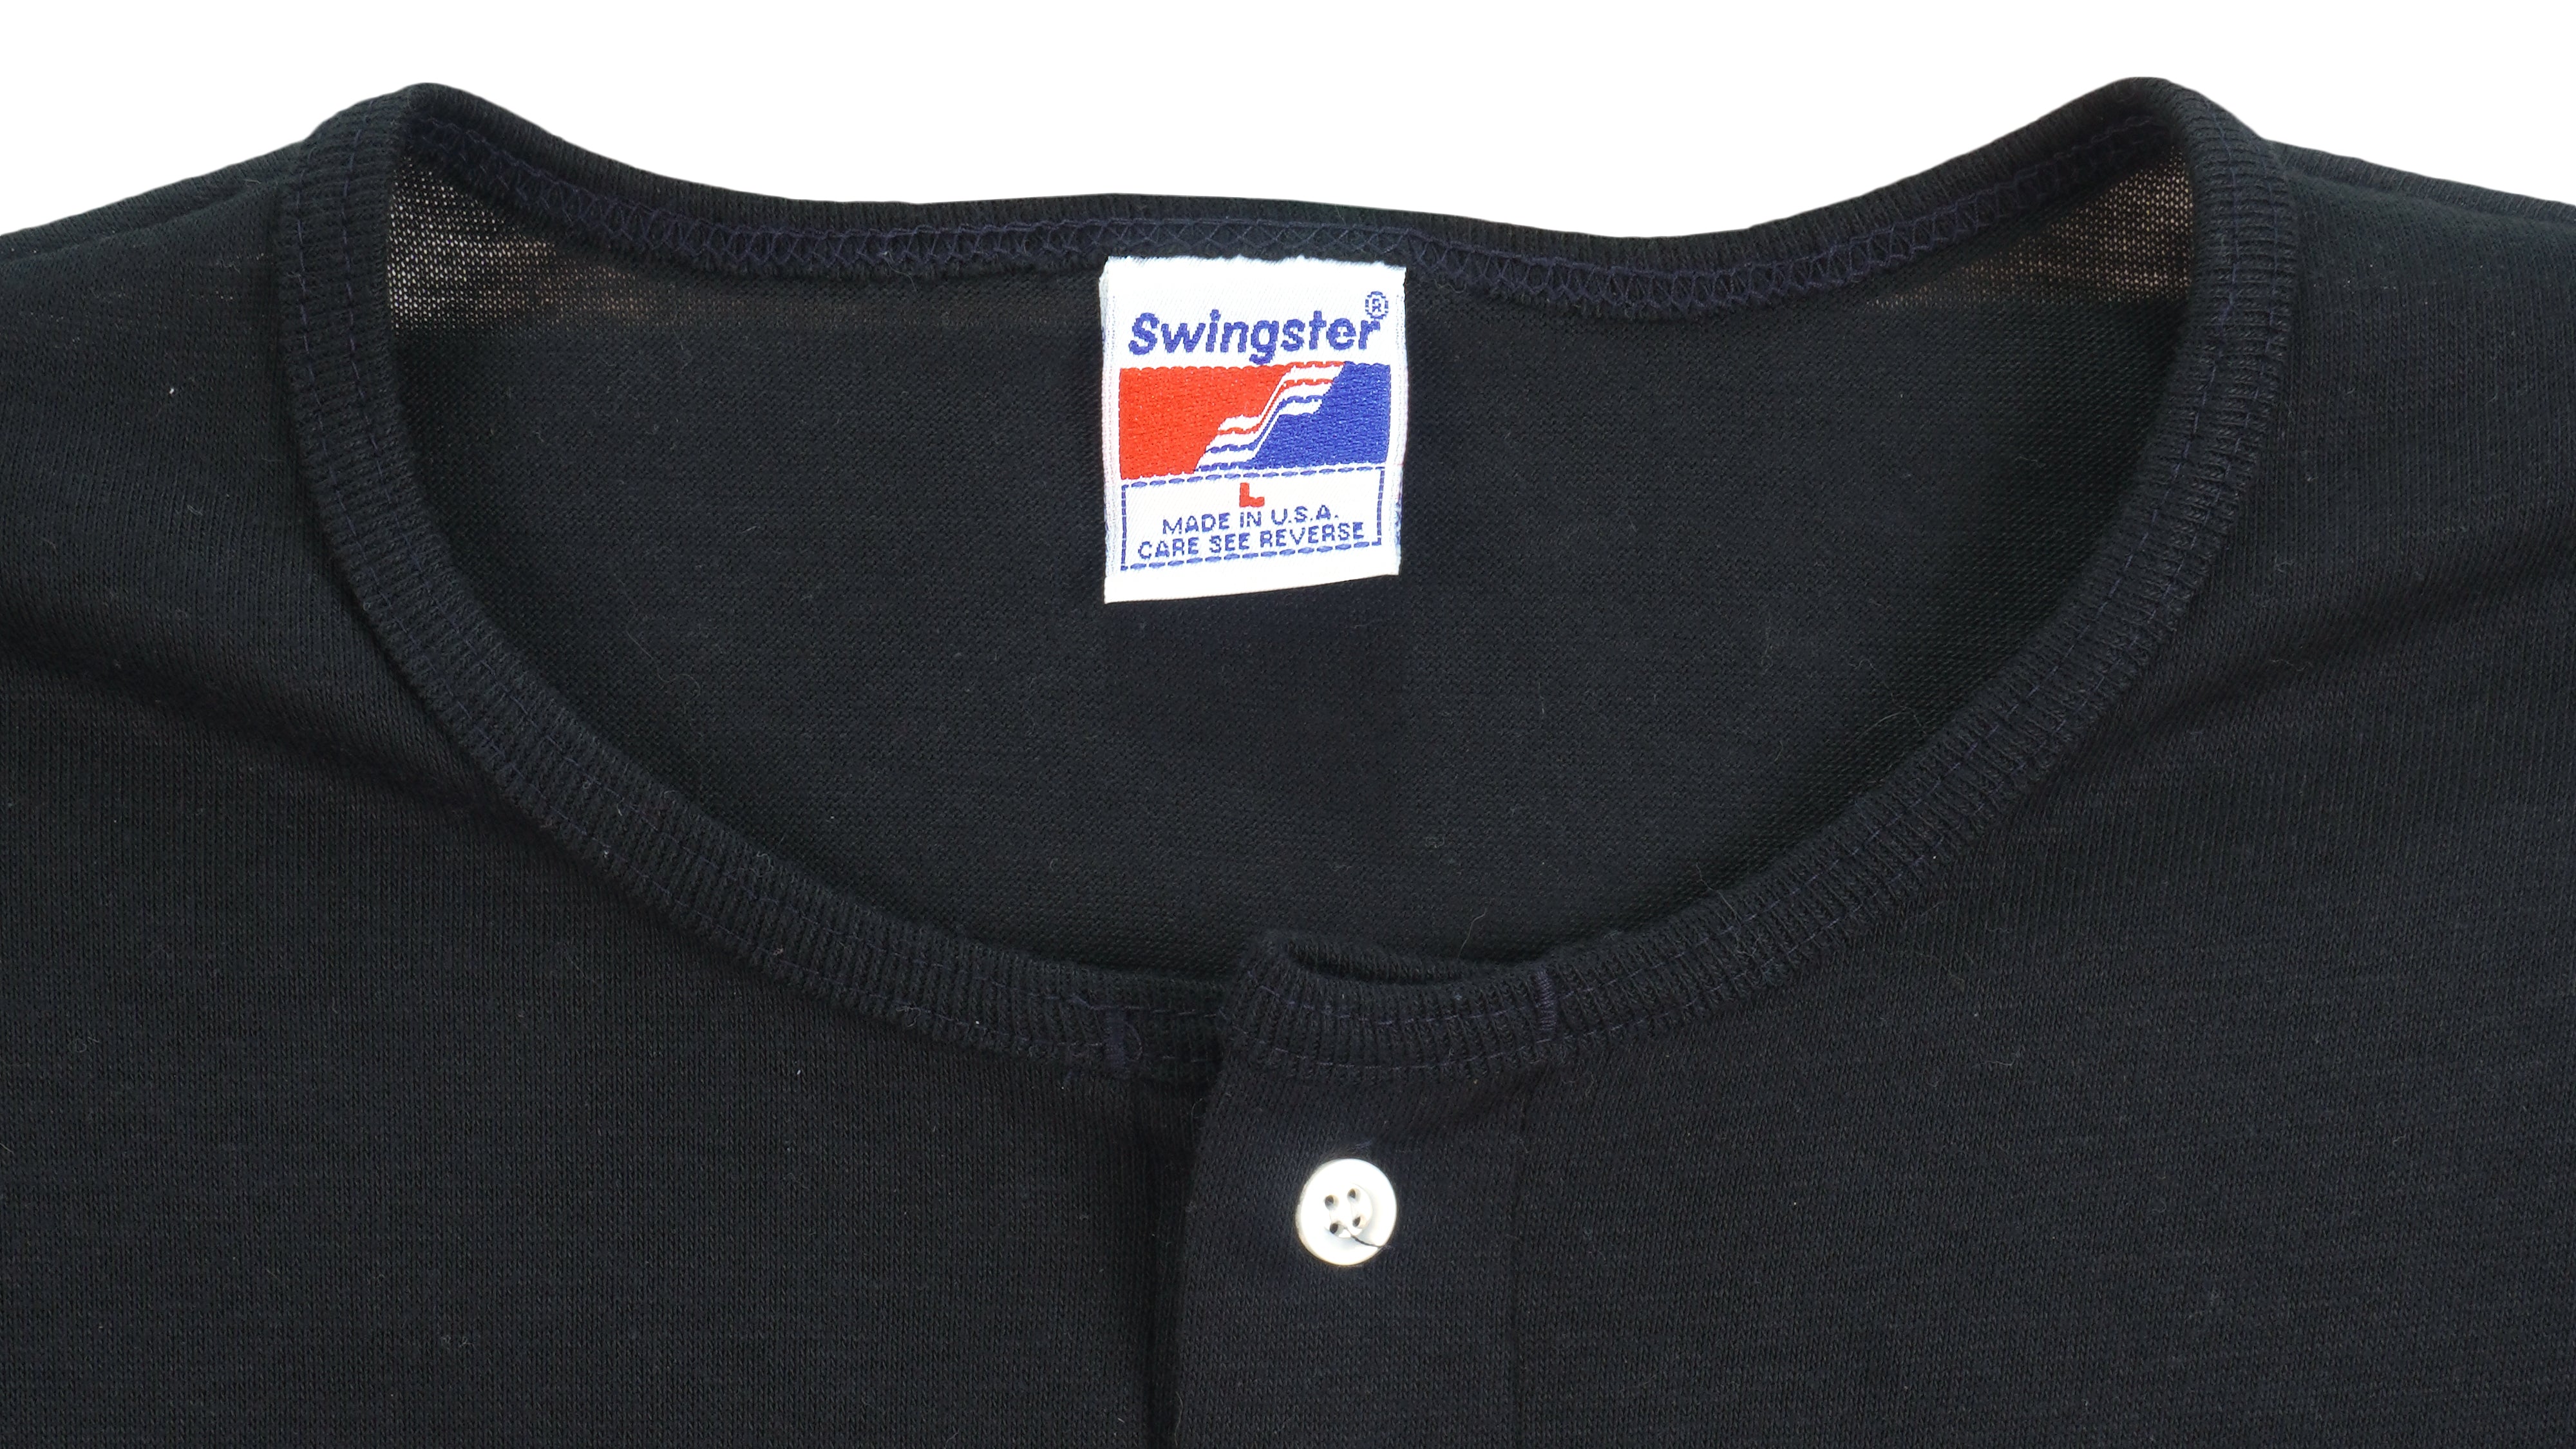 Vintage Baltimore Orioles T-Shirt 1992